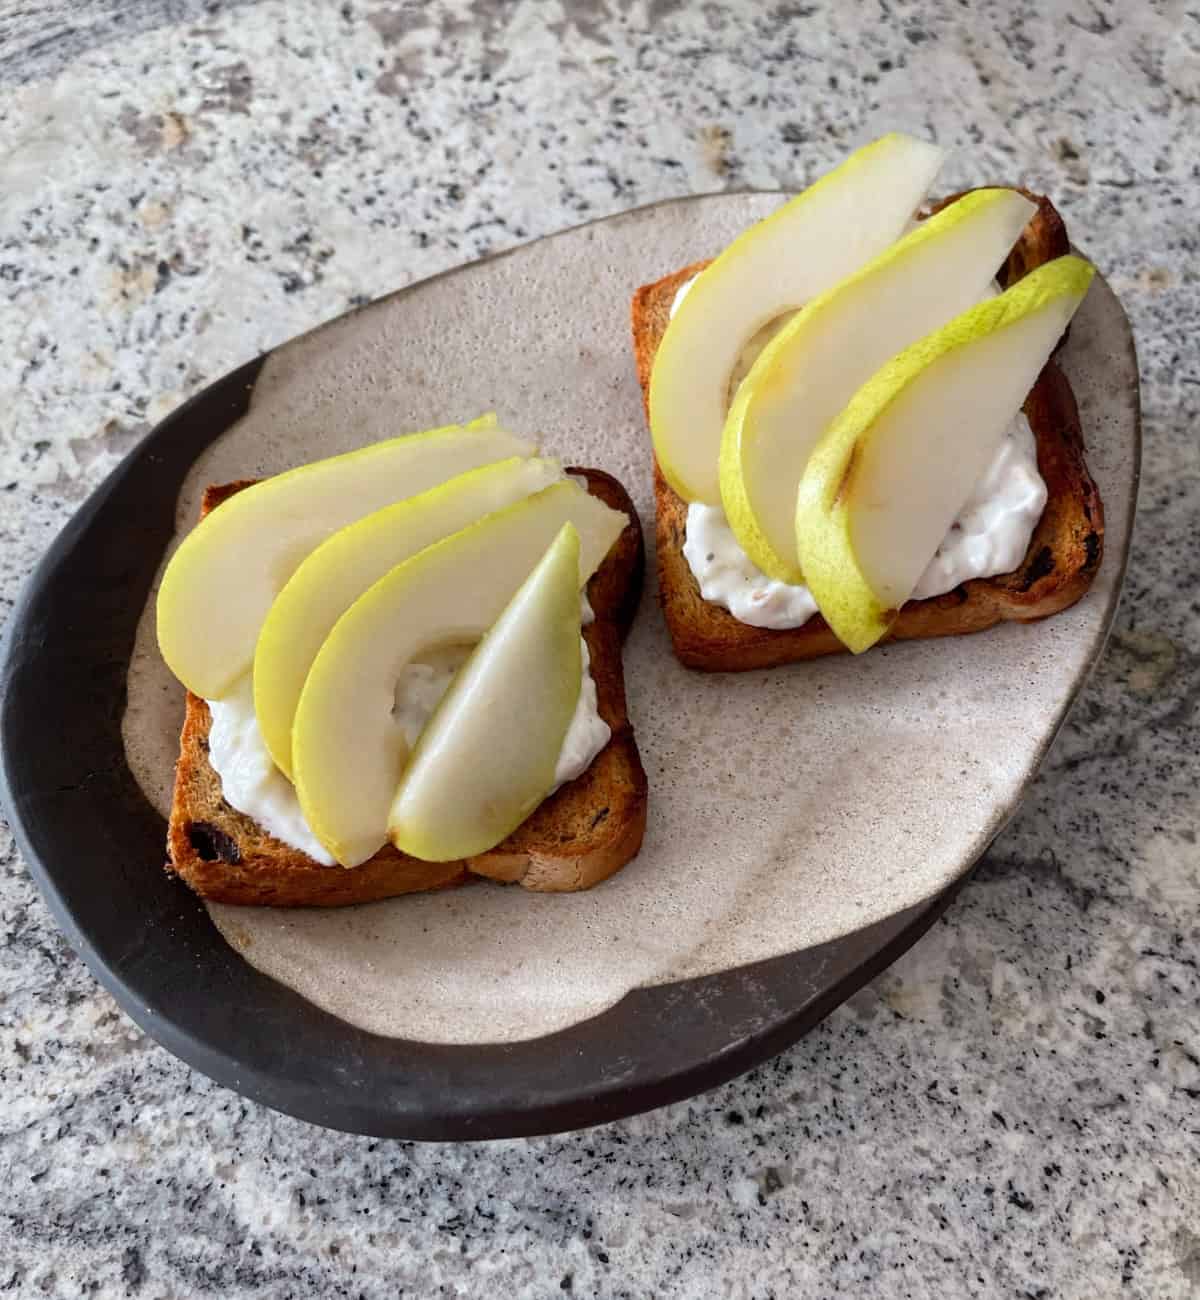 Cinnamon swirl raisin toast topped with honey-walnut yogurt spread and fresh sliced pears on ceramic plate.